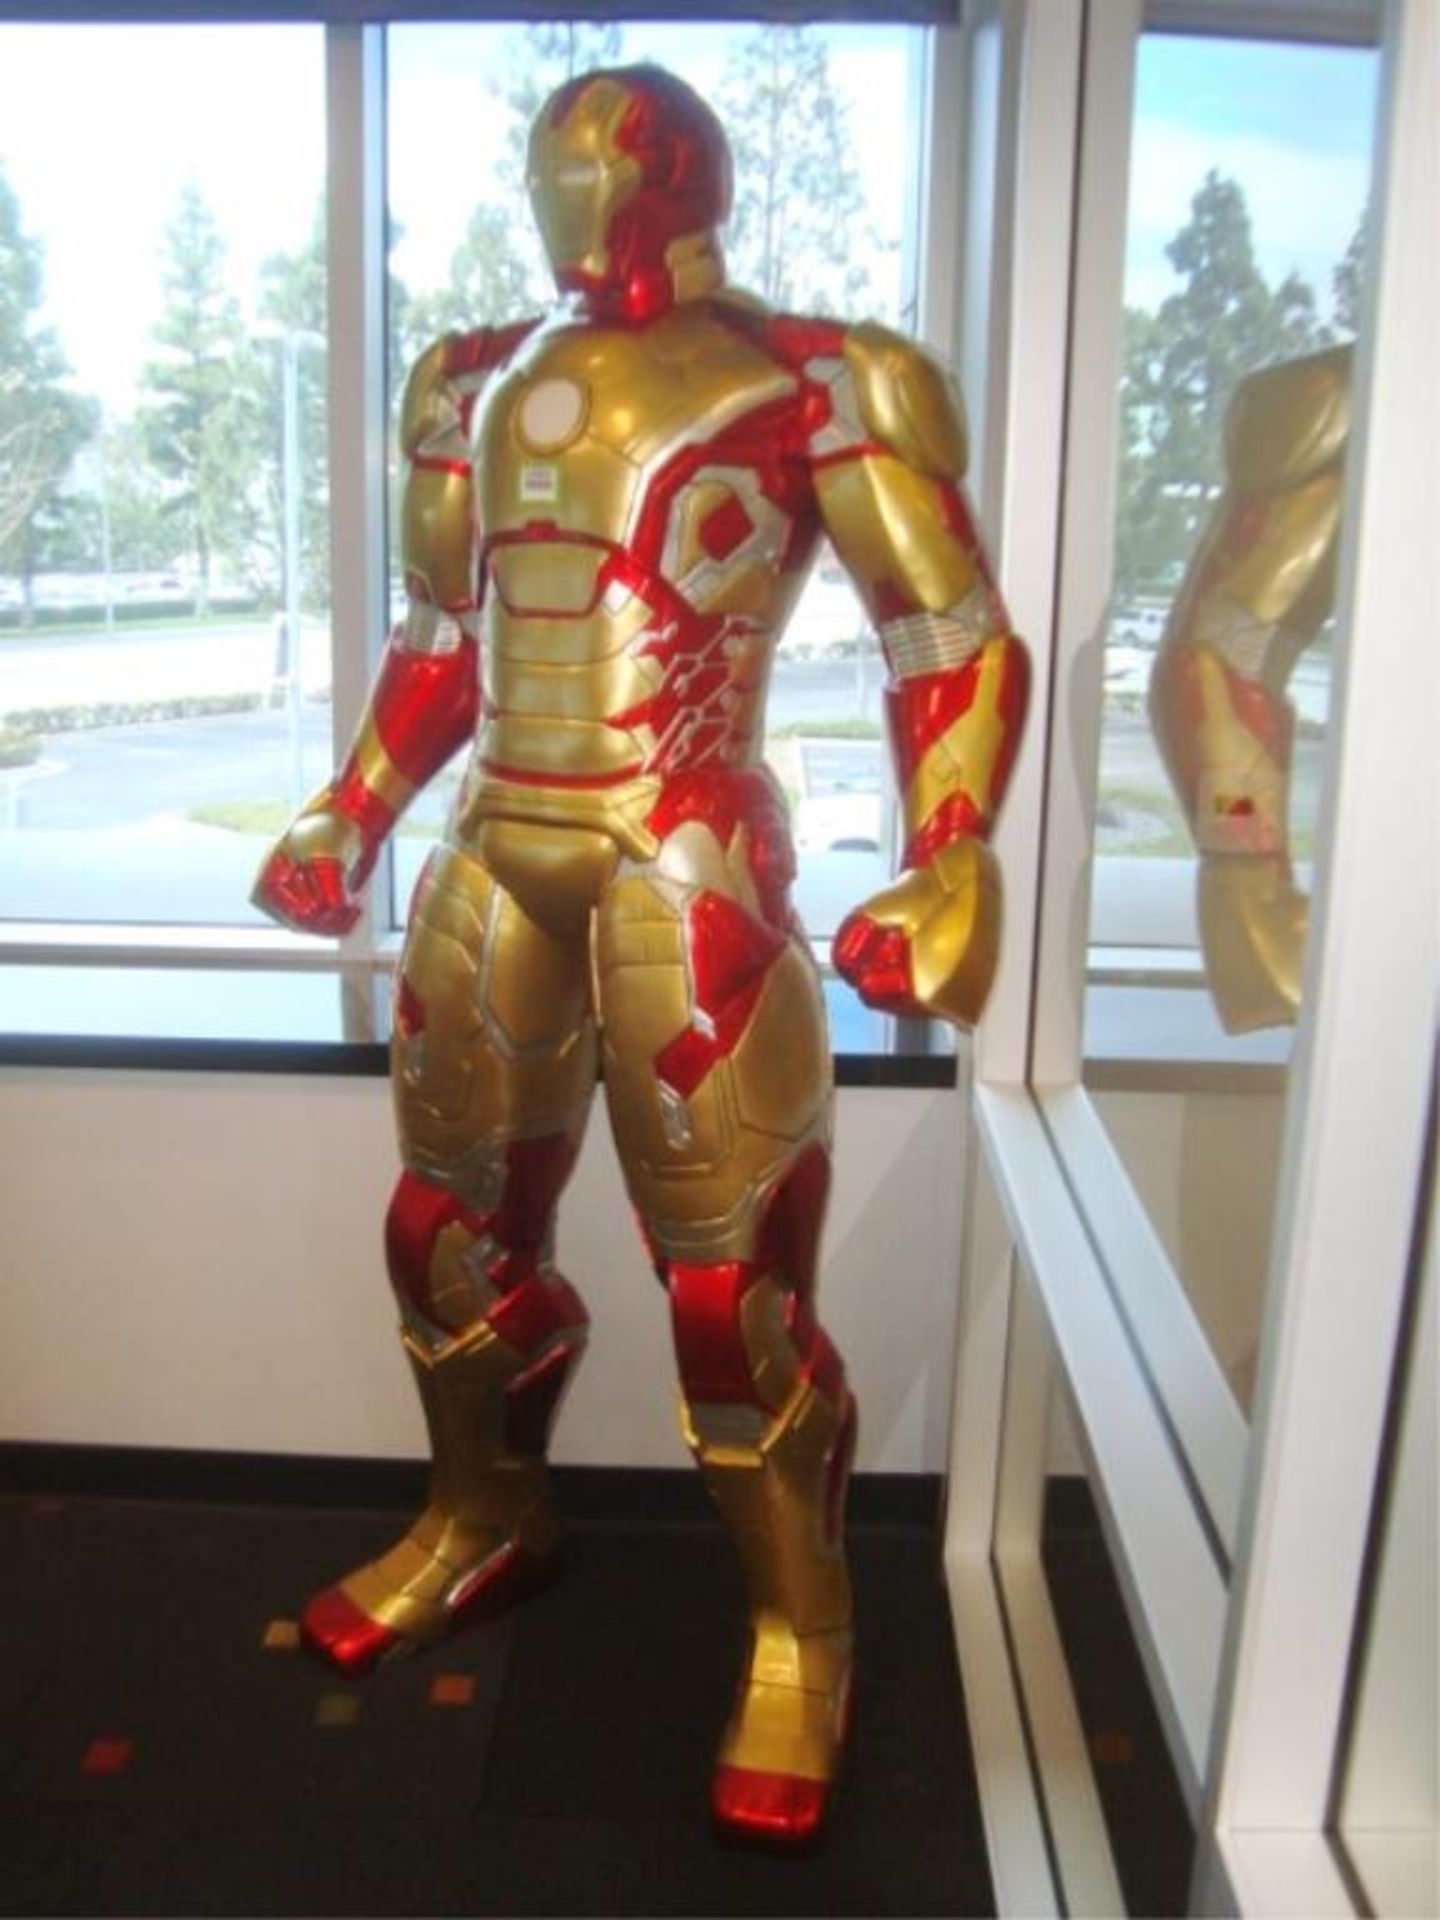 Marvel "IRON MAN 2" Super Hero - Image 3 of 6